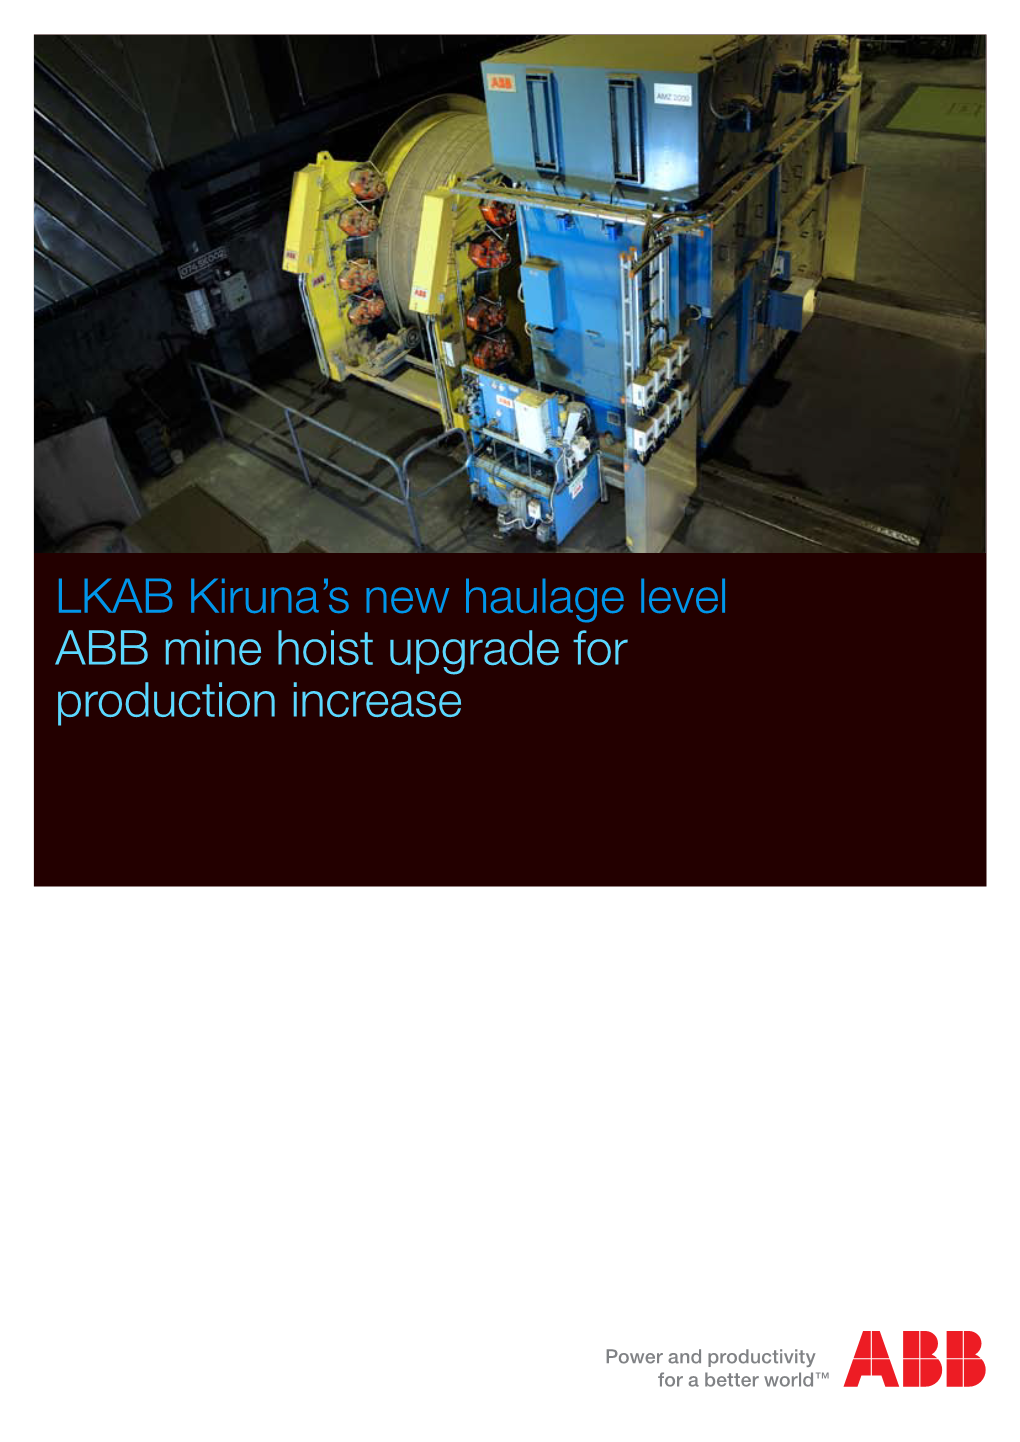 LKAB Kiruna's New Haulage Level ABB Mine Hoist Upgrade for Production